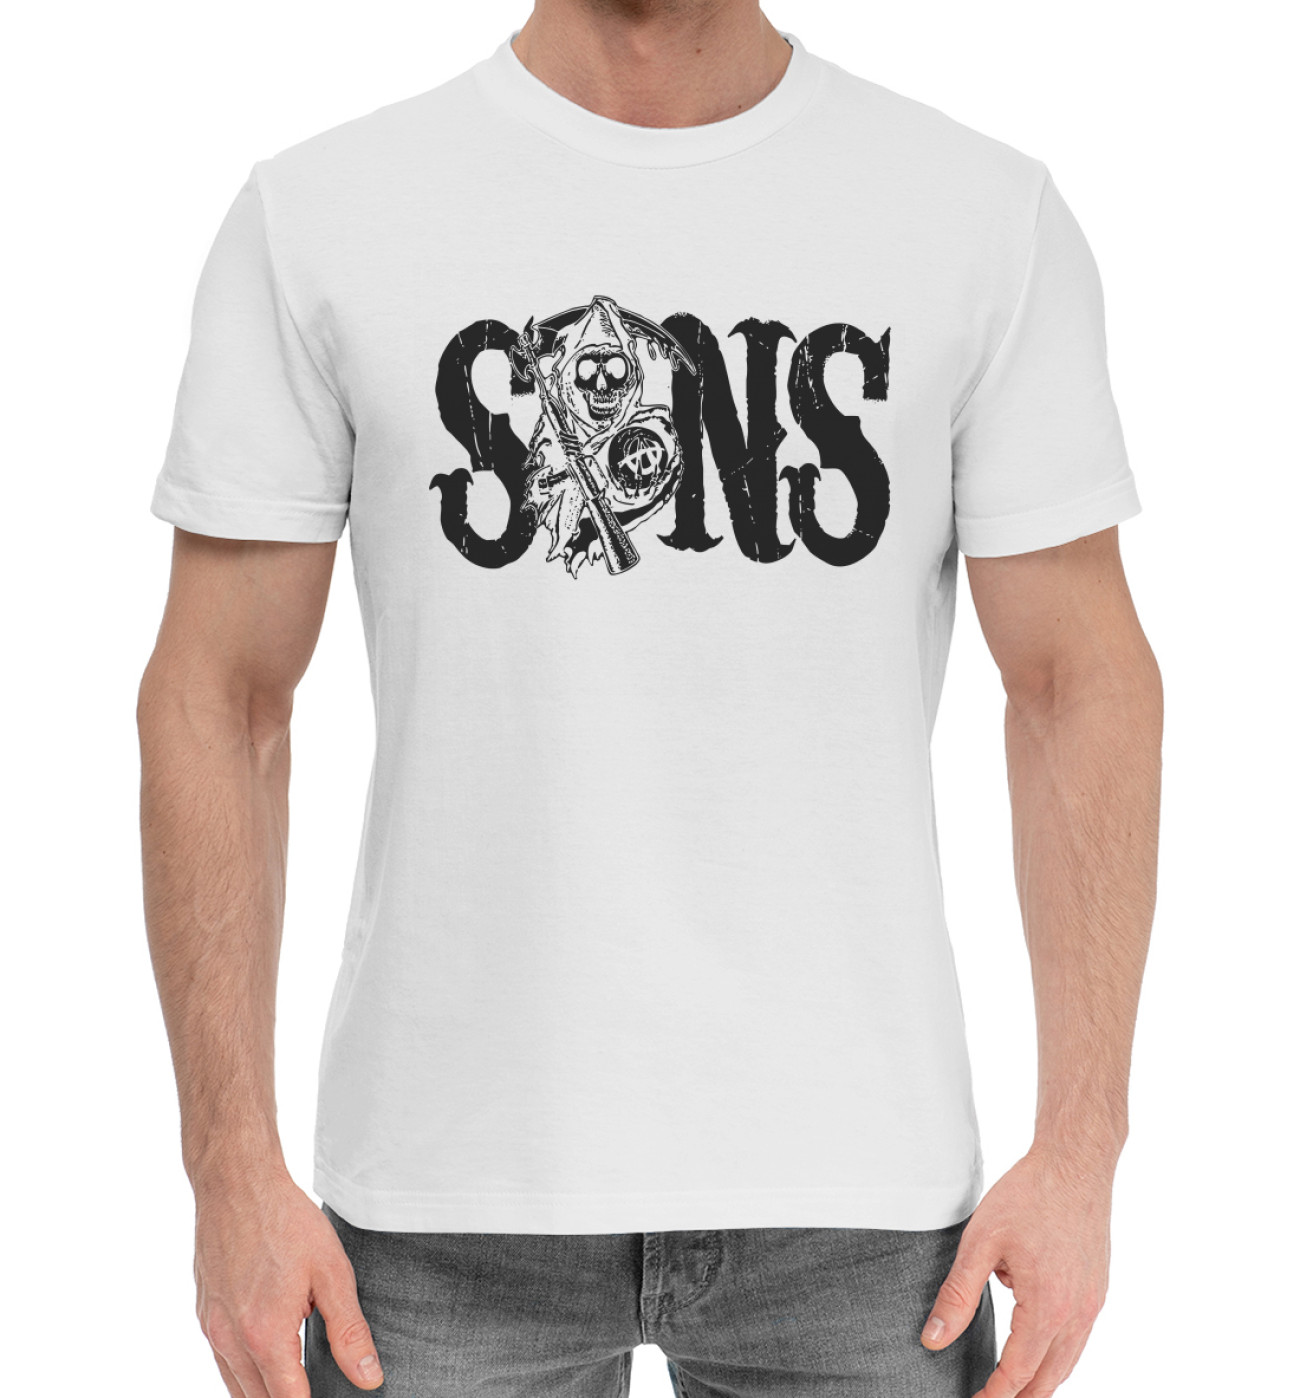 Мужская Хлопковая футболка Sons of Anarchy, артикул: SOA-425130-hfu-2